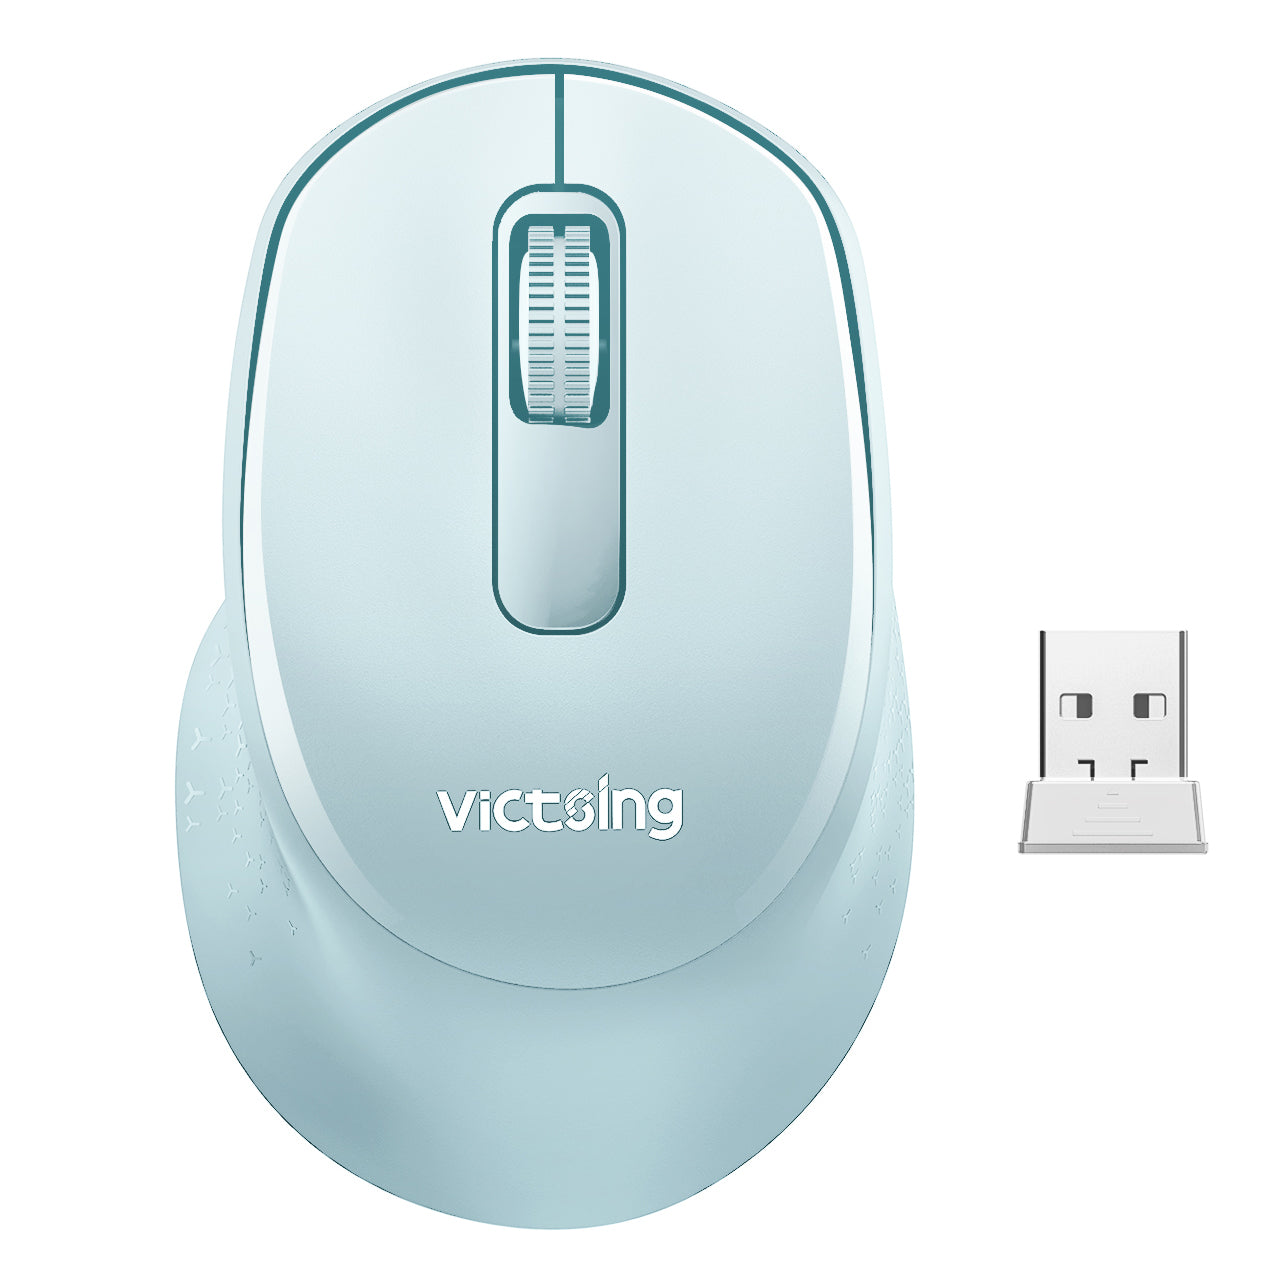 VicTsing Mini Ergonomic Wireless Mouse, Mint Green